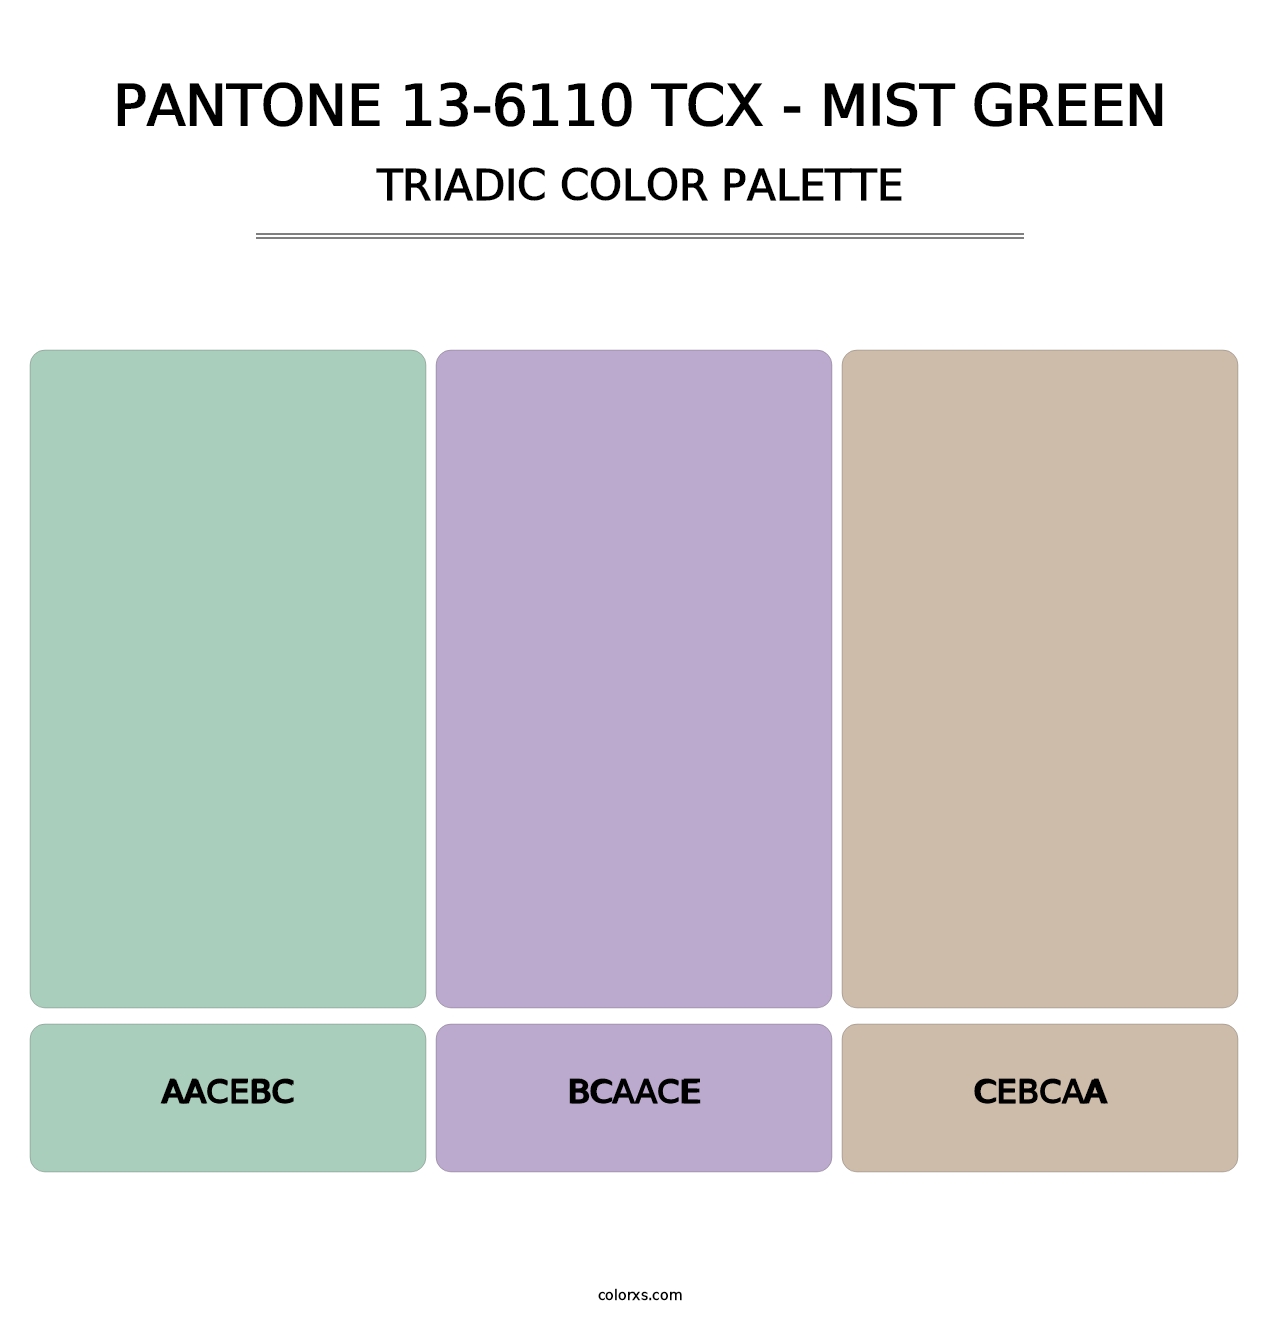 PANTONE 13-6110 TCX - Mist Green - Triadic Color Palette